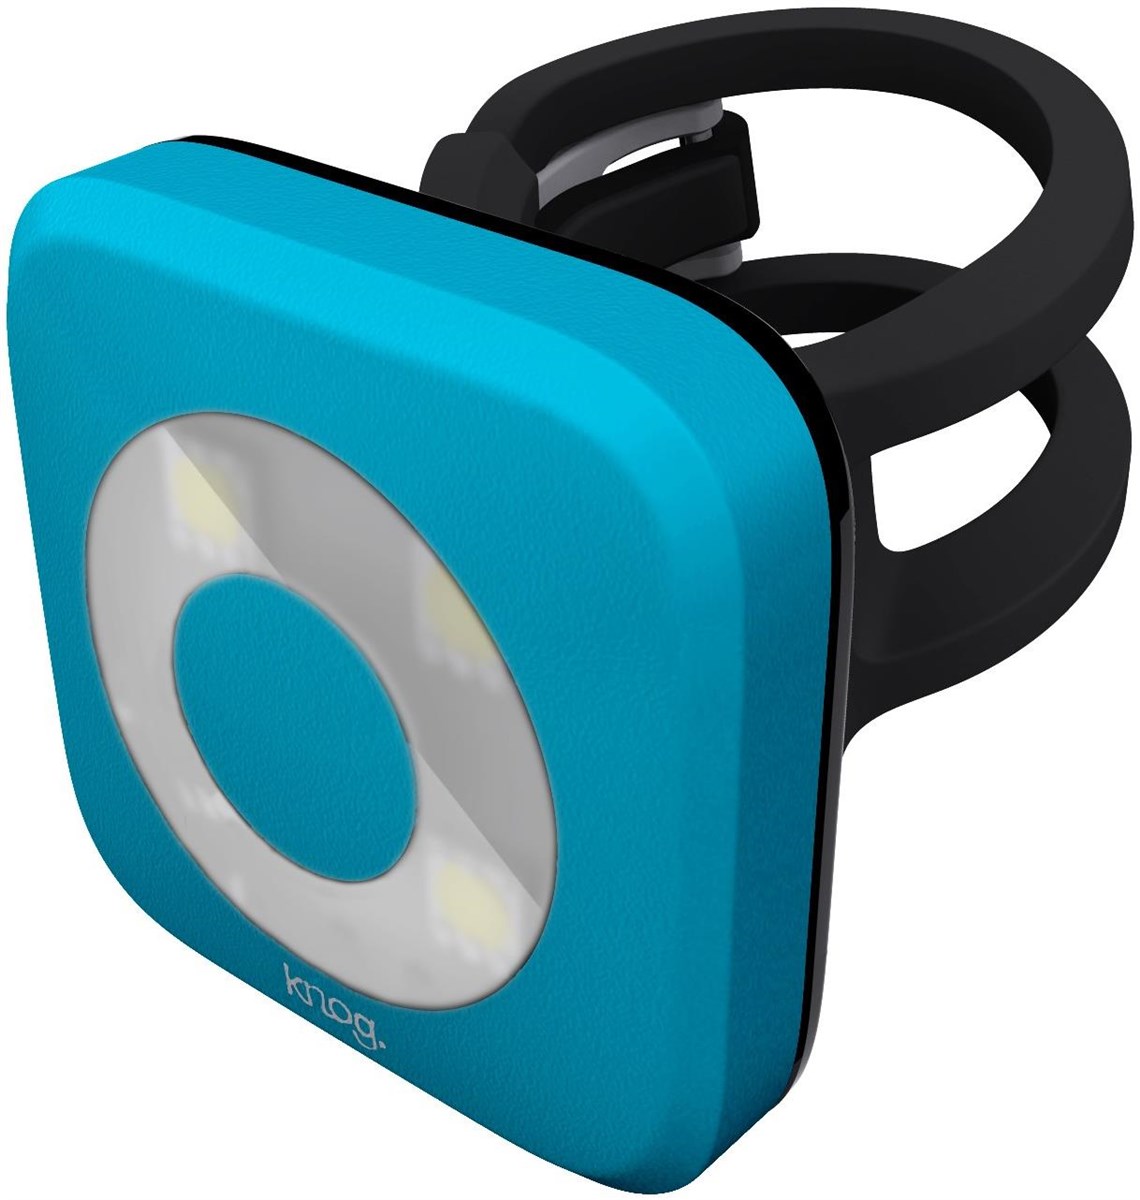 Knog Blinder 4 LED O USB Rechargeable Rear Light product image